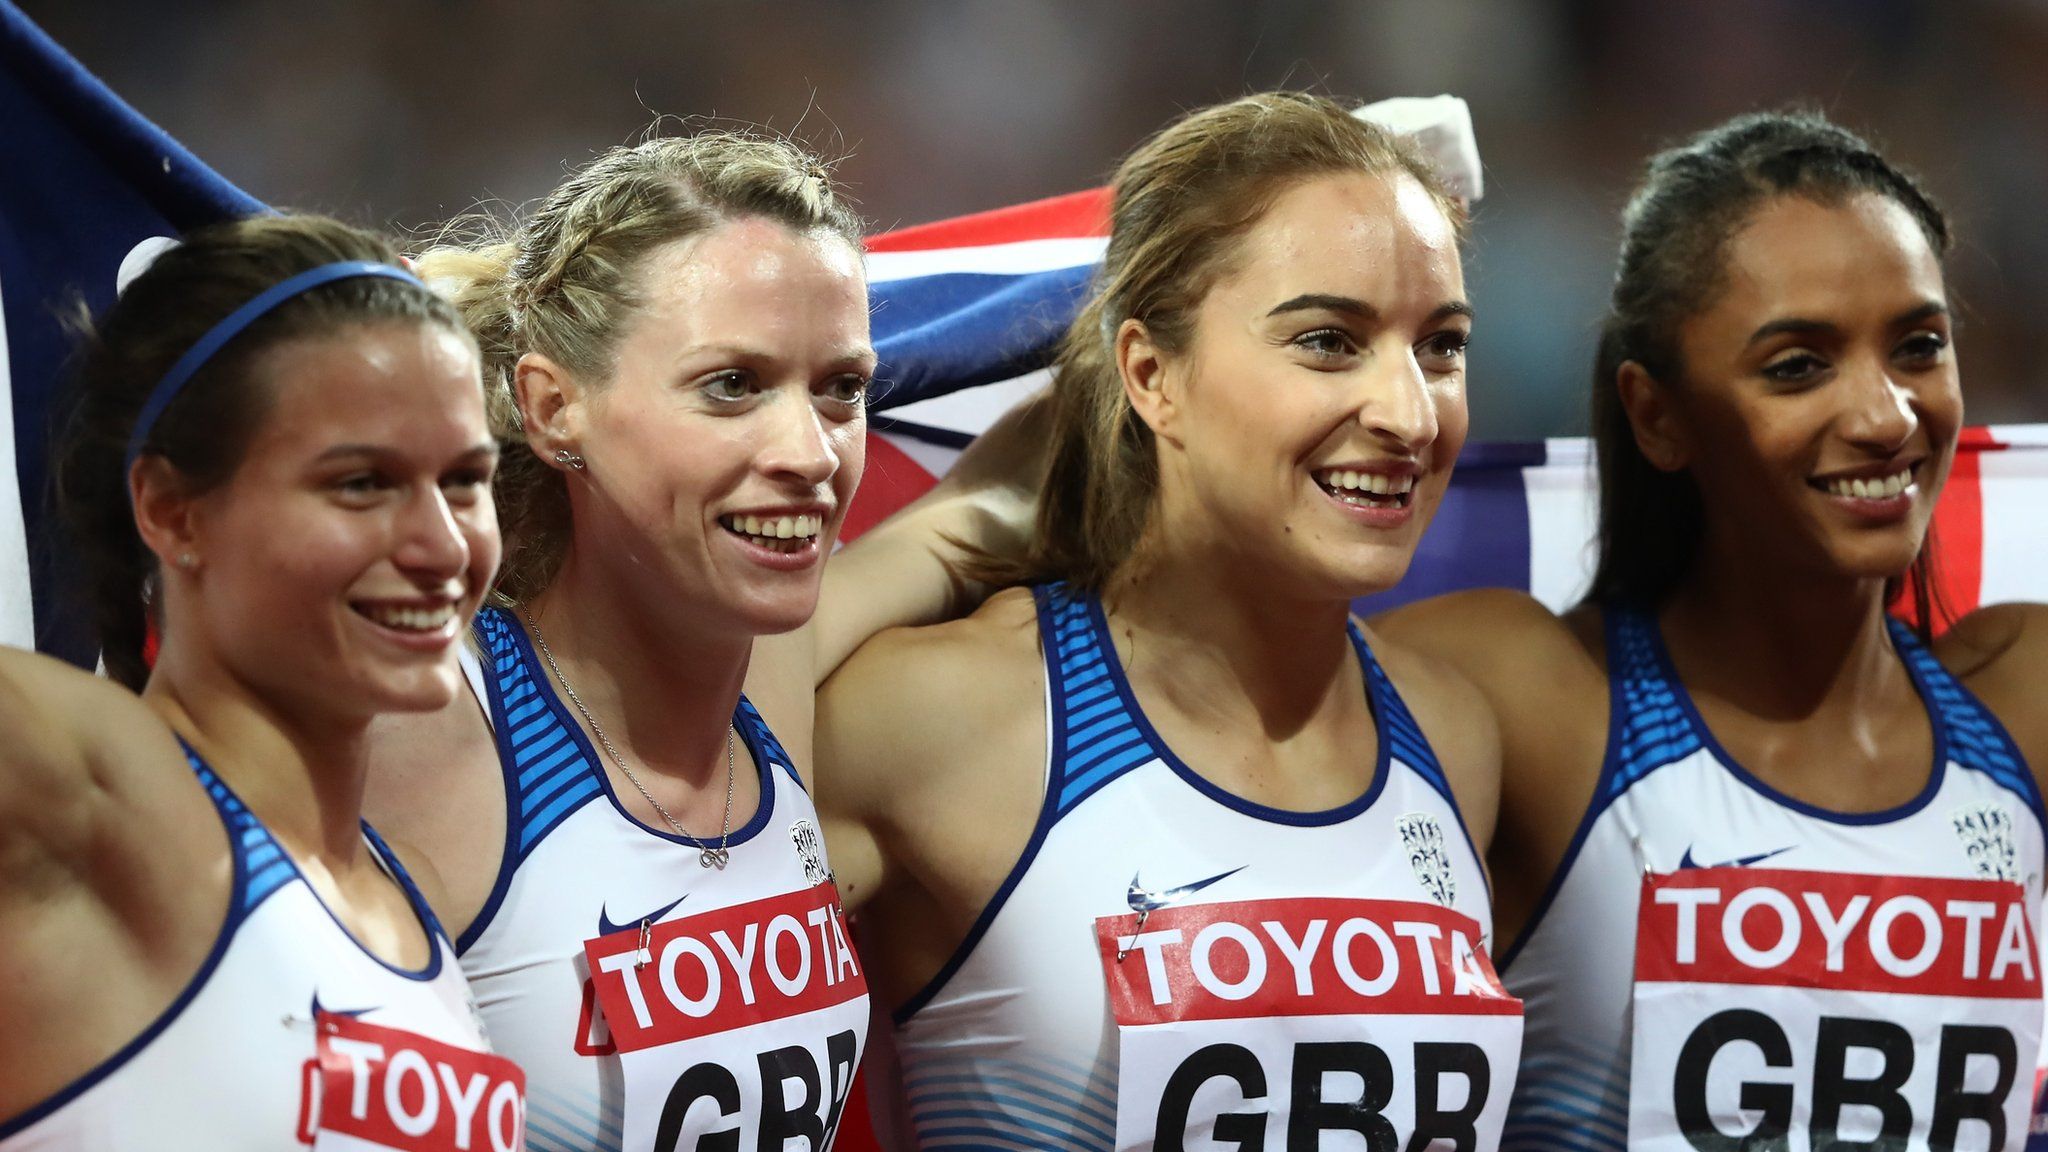 Britain's women's relay team